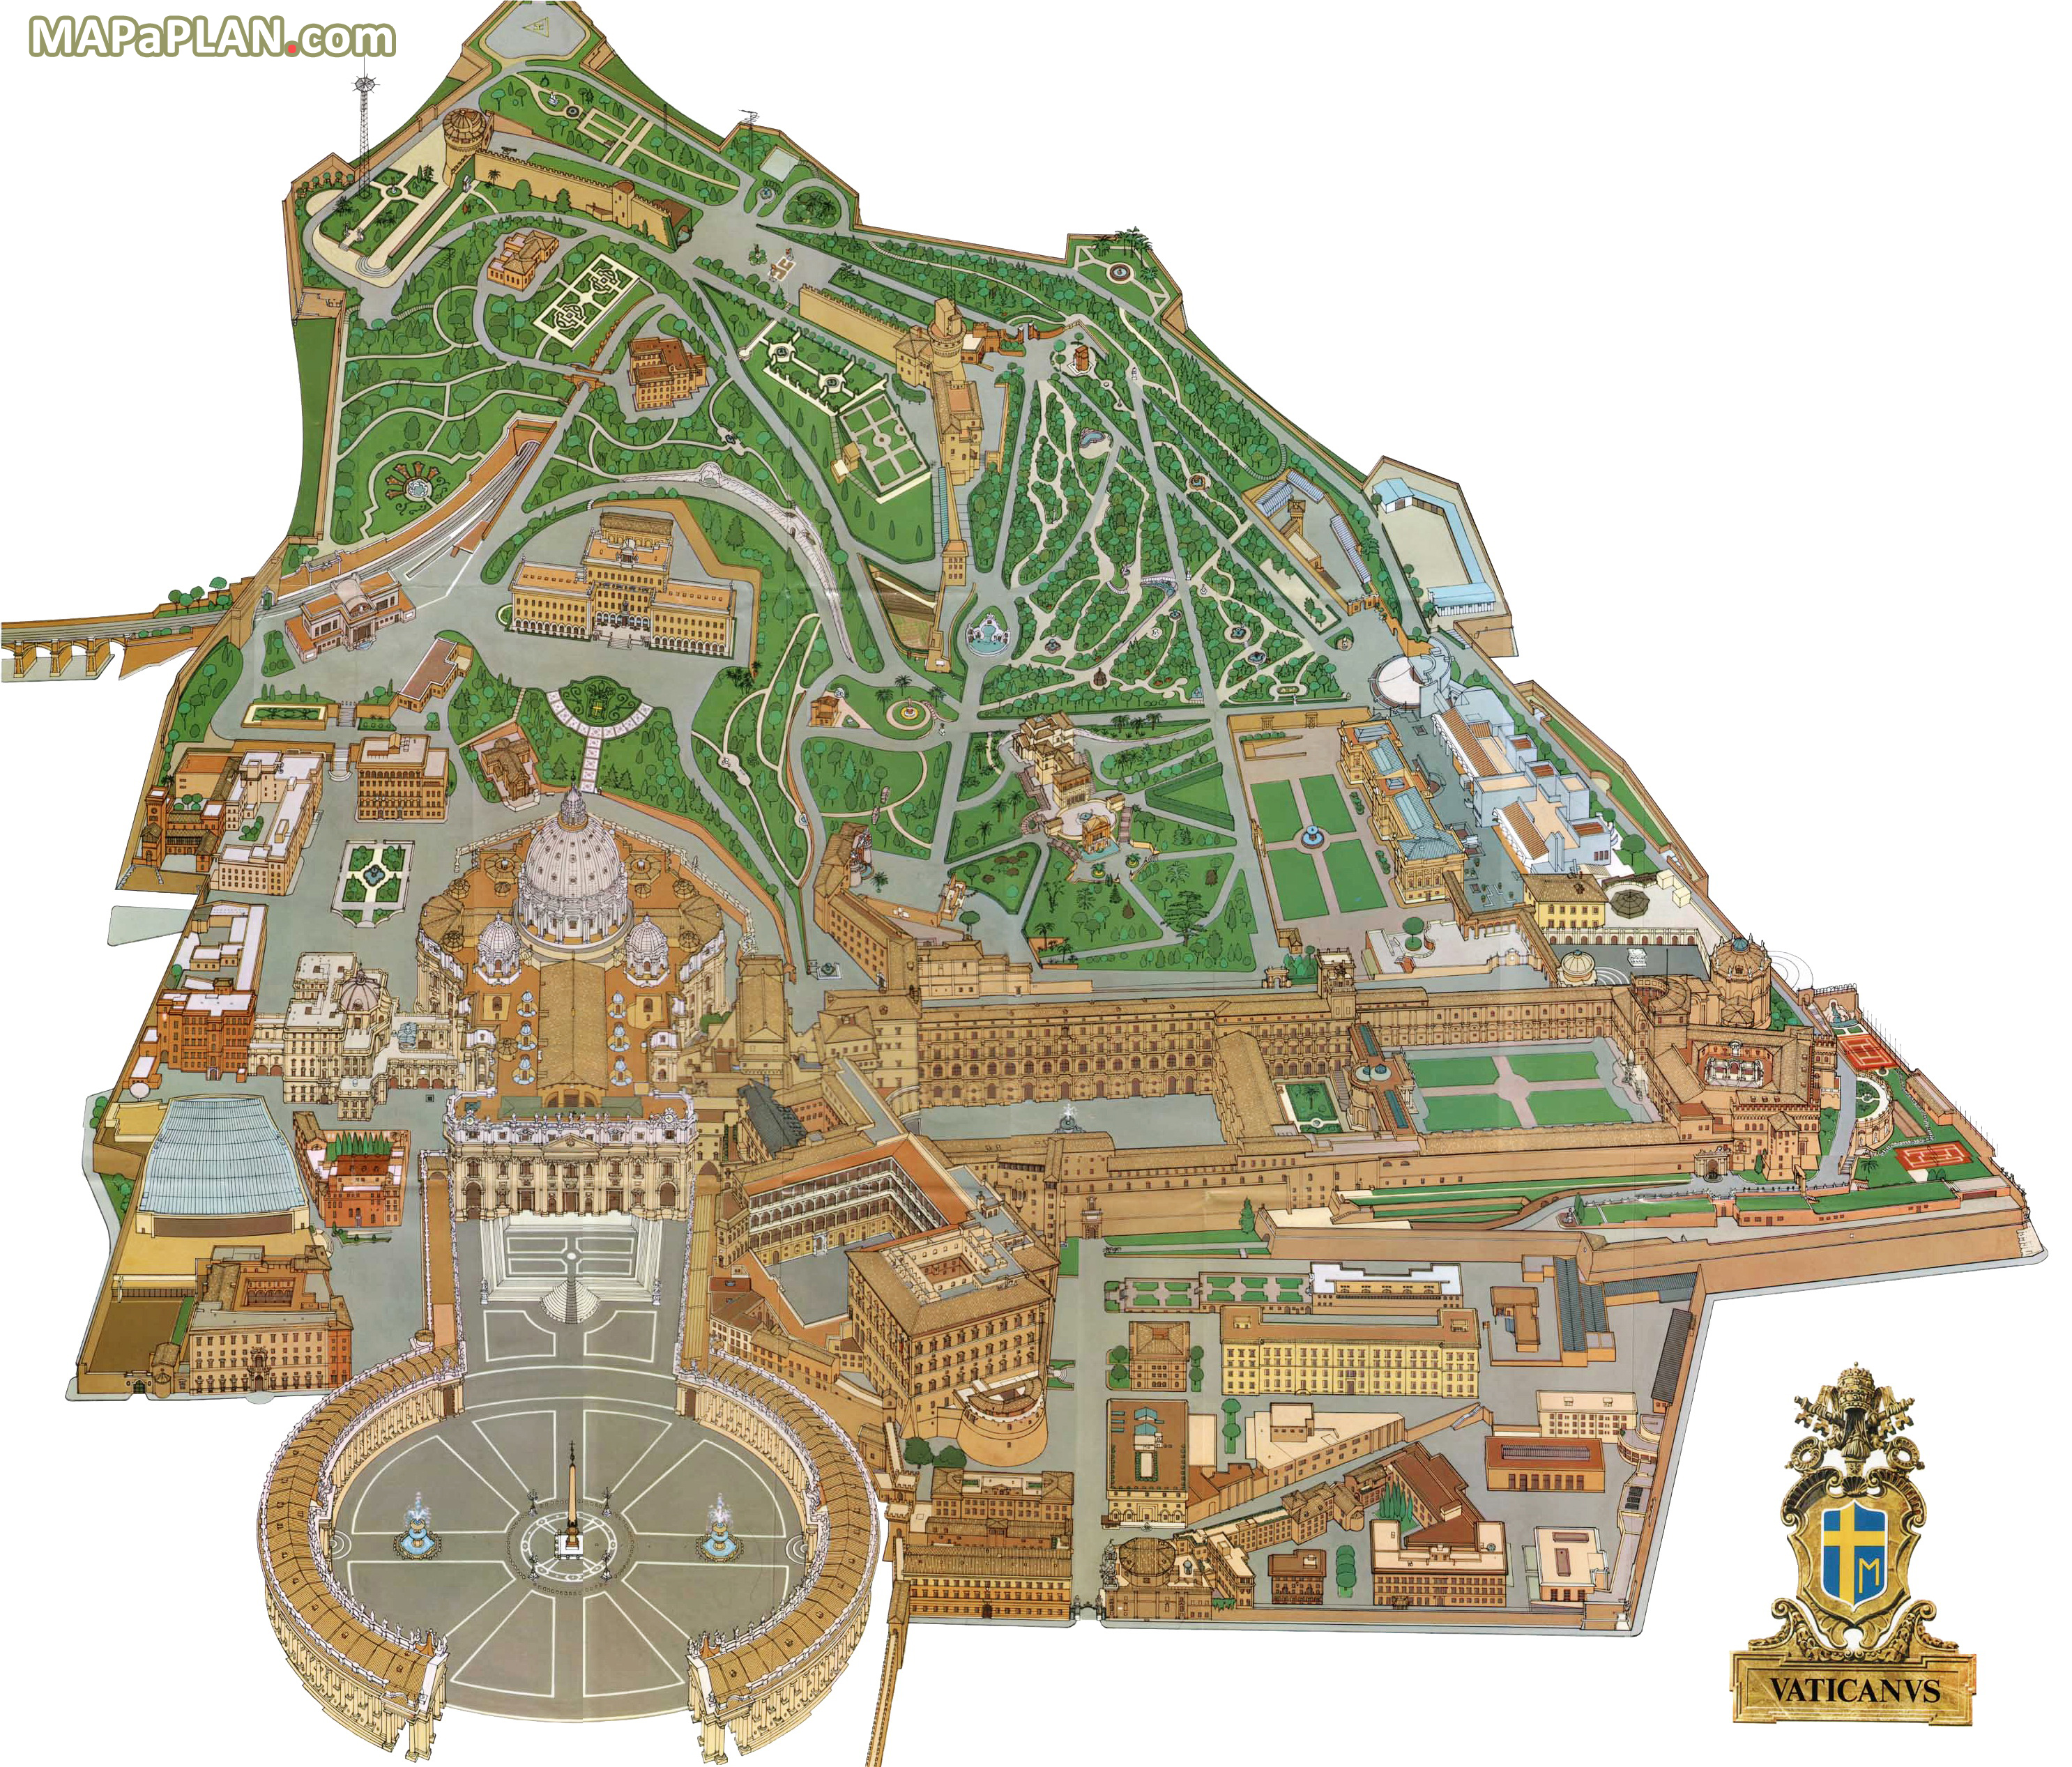 Rome map - Vatican City bird's eye (aerial,3d) main buildings view